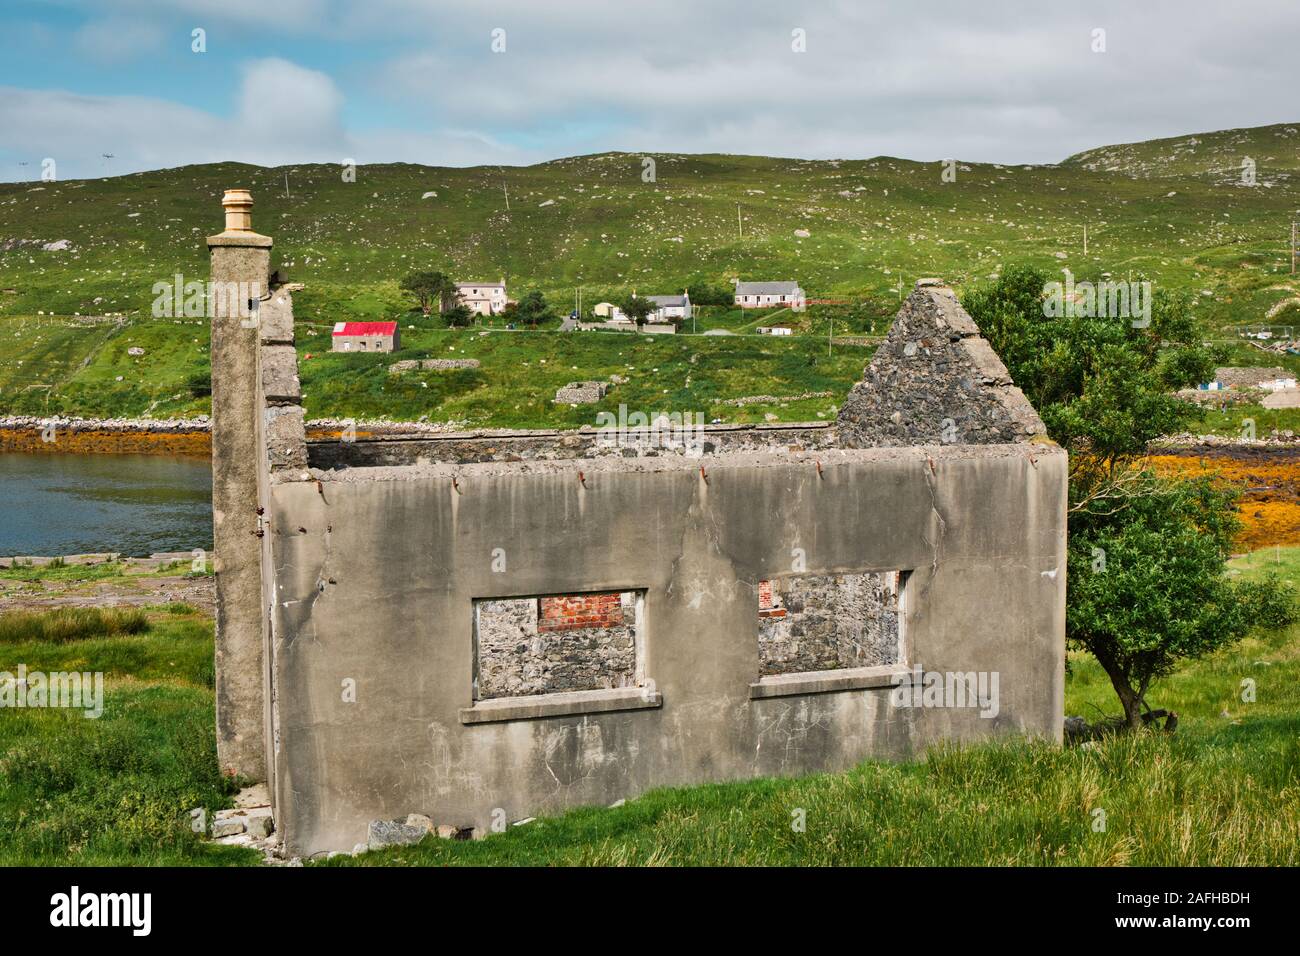 Abandoned crofters dwelling, Isle of Harris, Outer Hebrides, Scotland Stock Photo